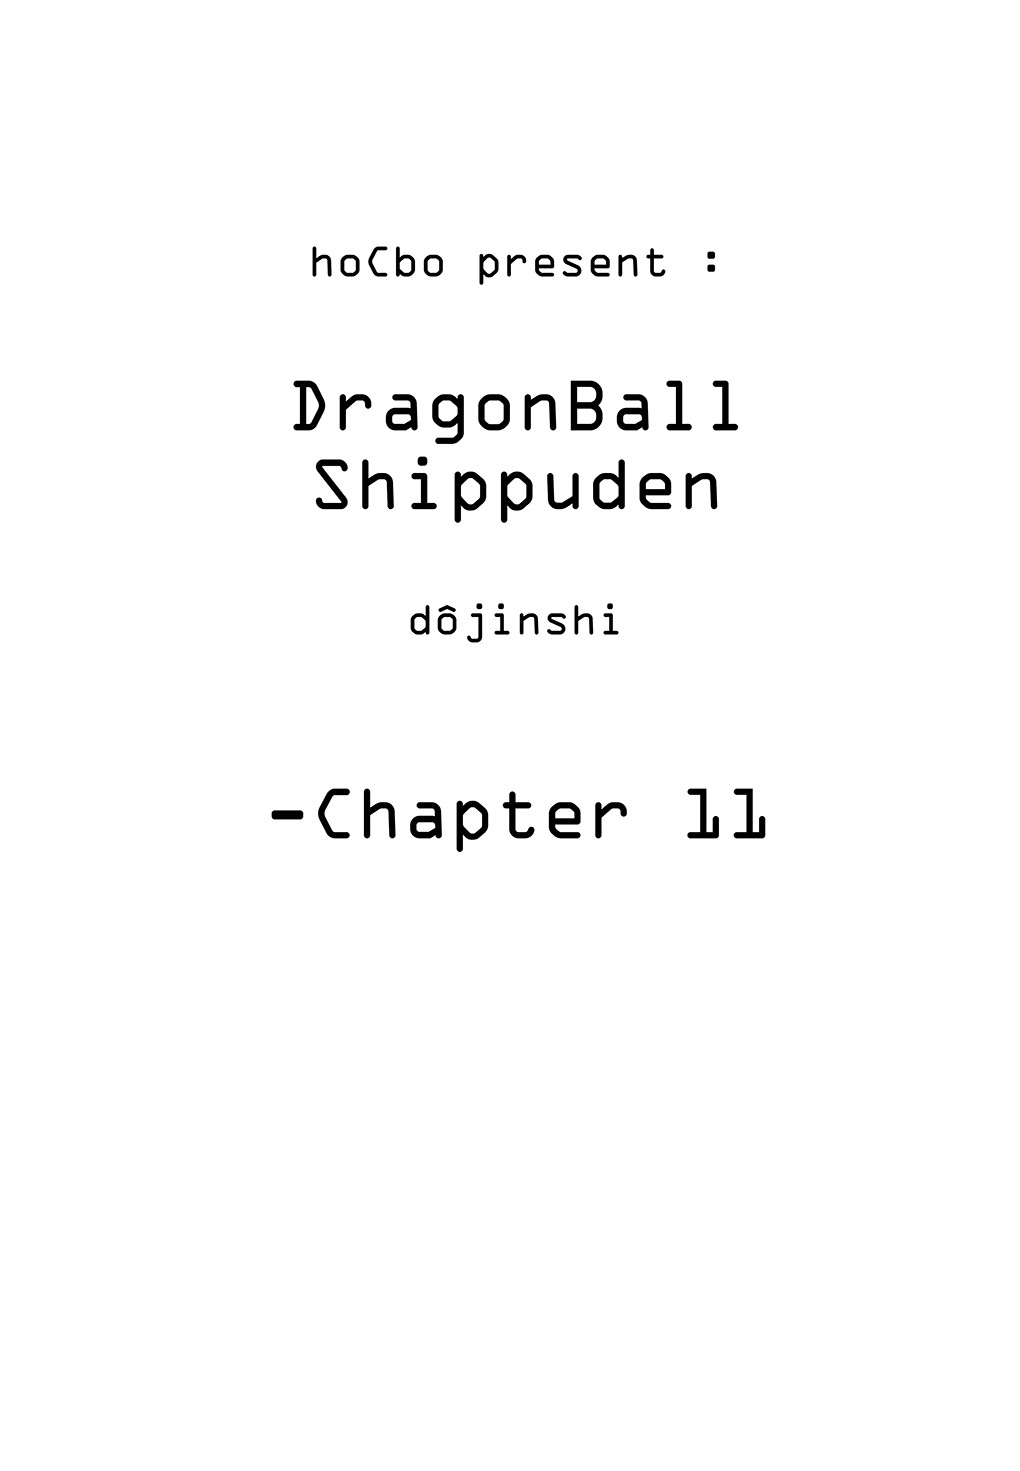 Dragon Ball Shippuden - Page 1